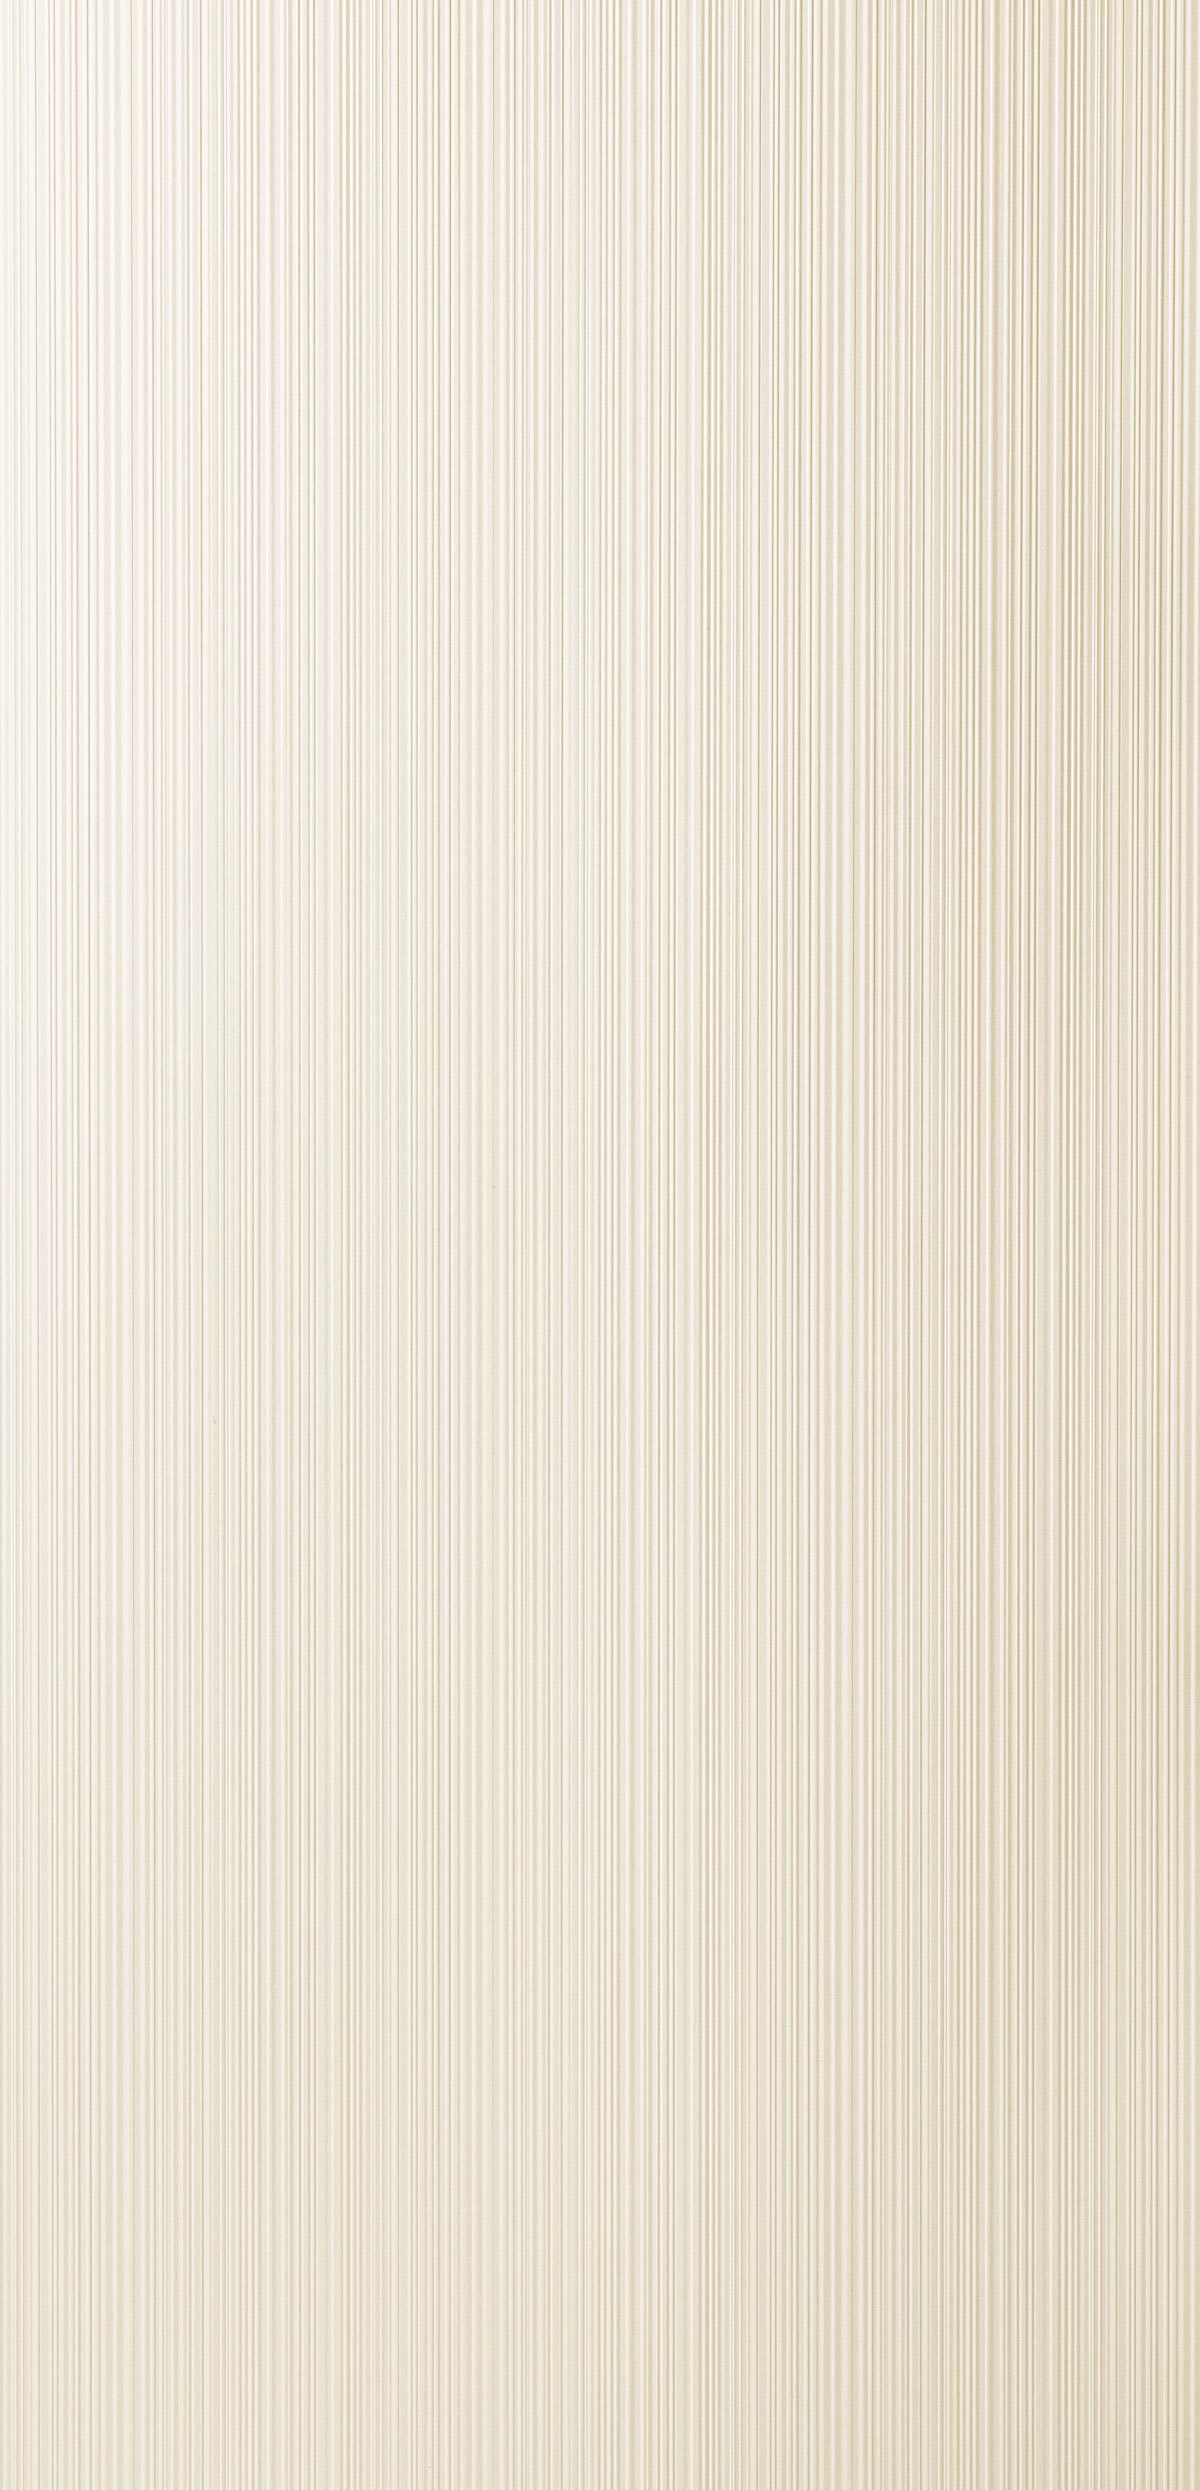 Lines Ivory 002-panel